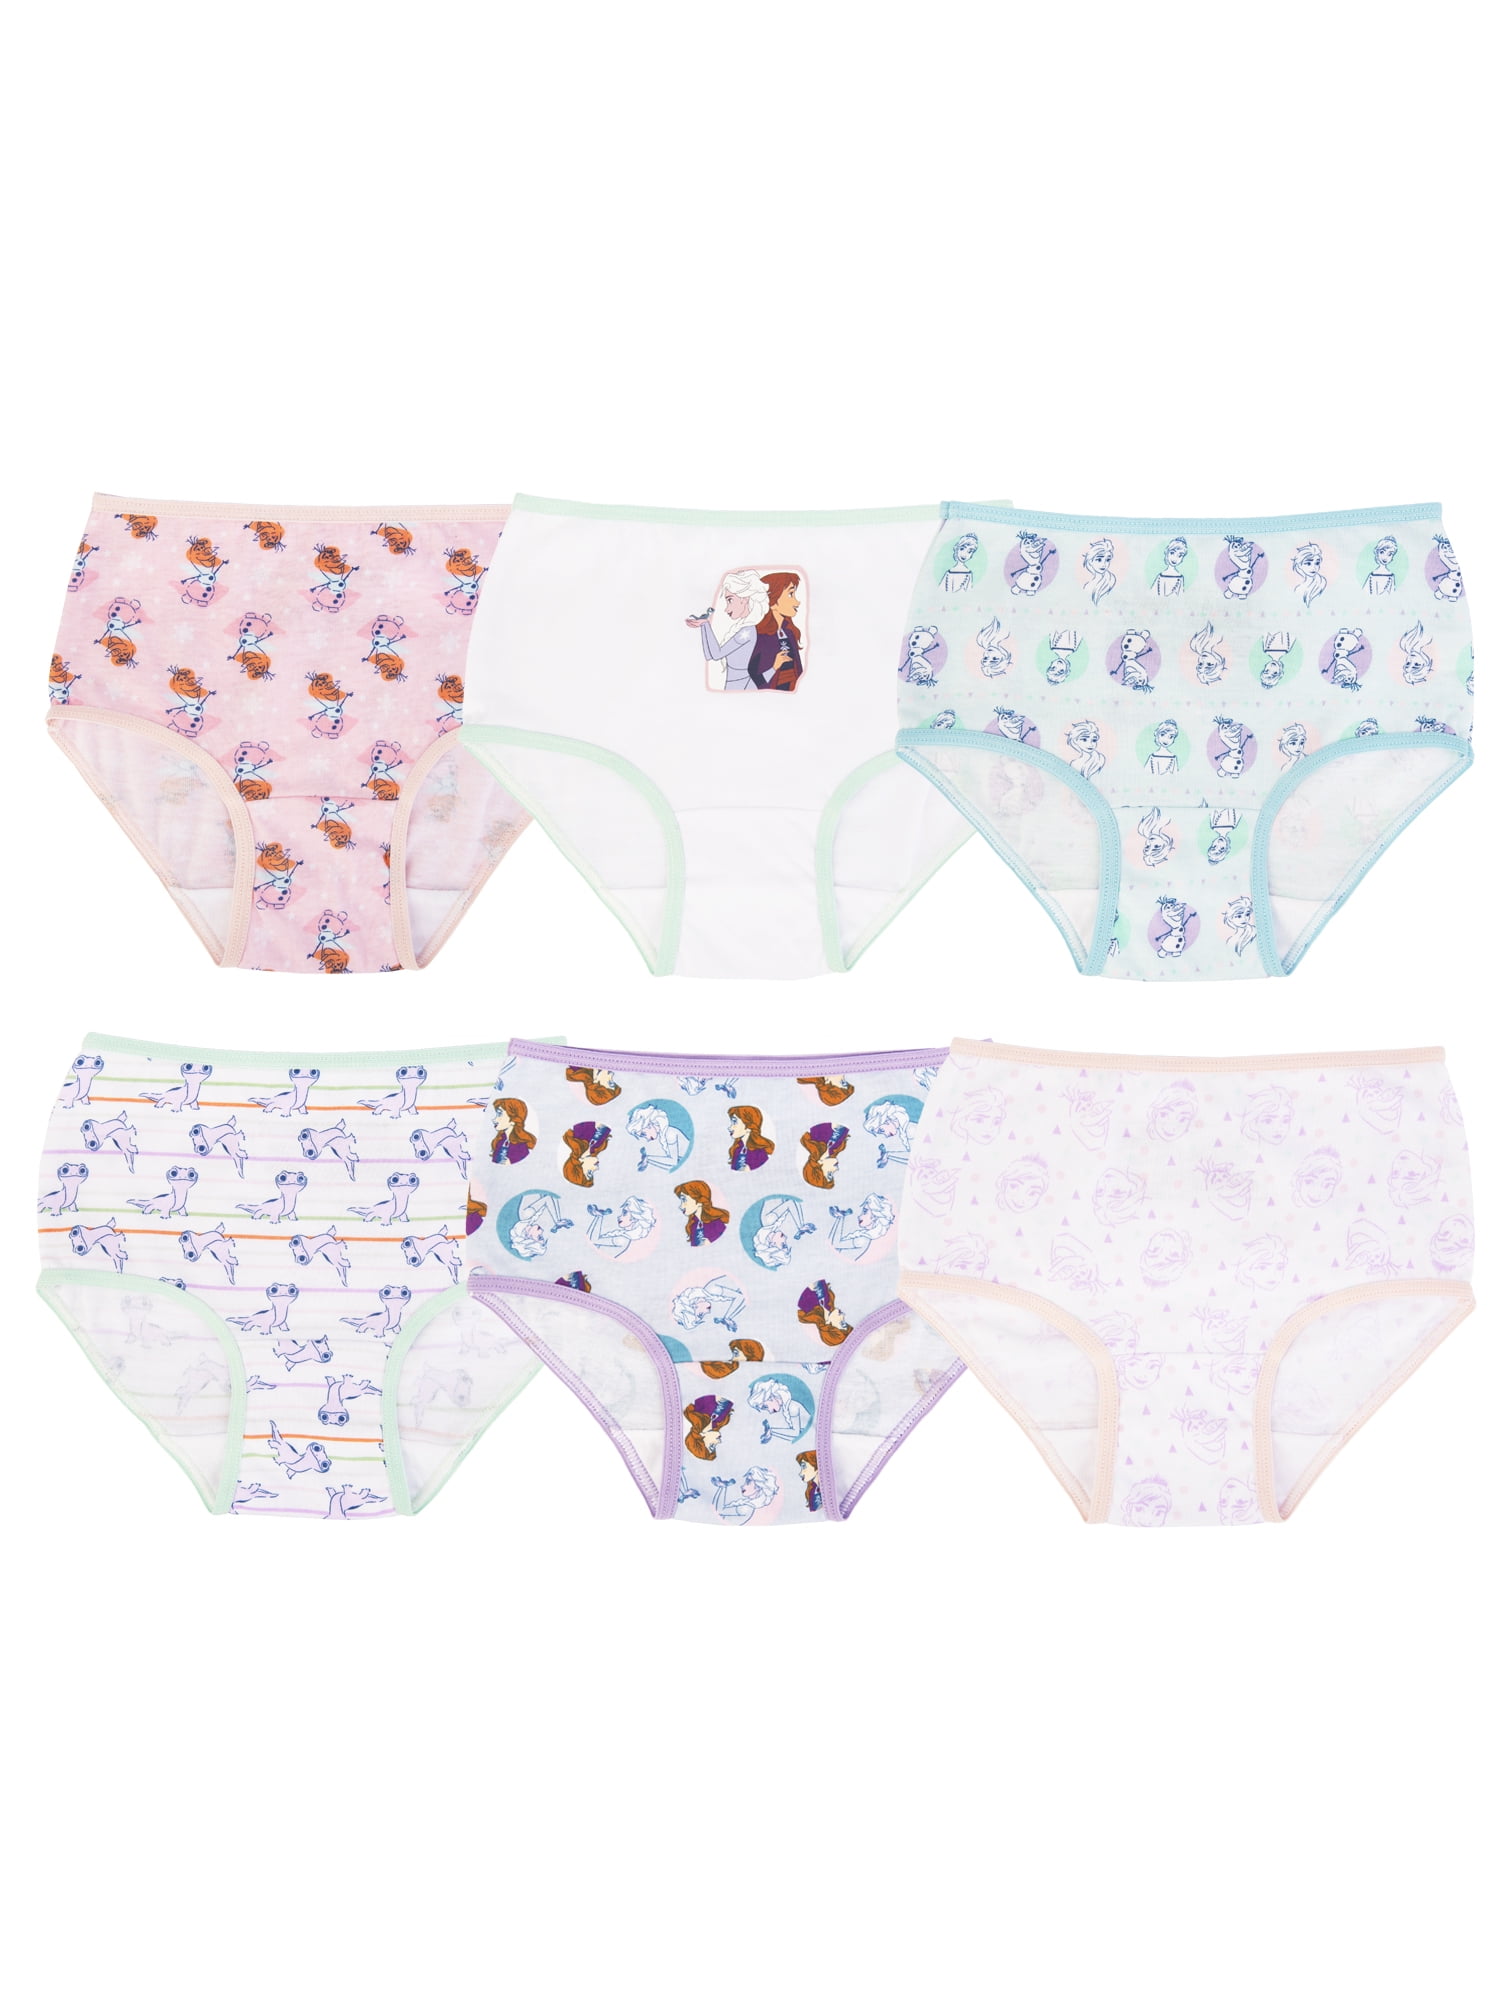 Disney Princess Girls Potty Training Pants Panties Underwear Toddler 7-Pack  Size 2T 3T 4T